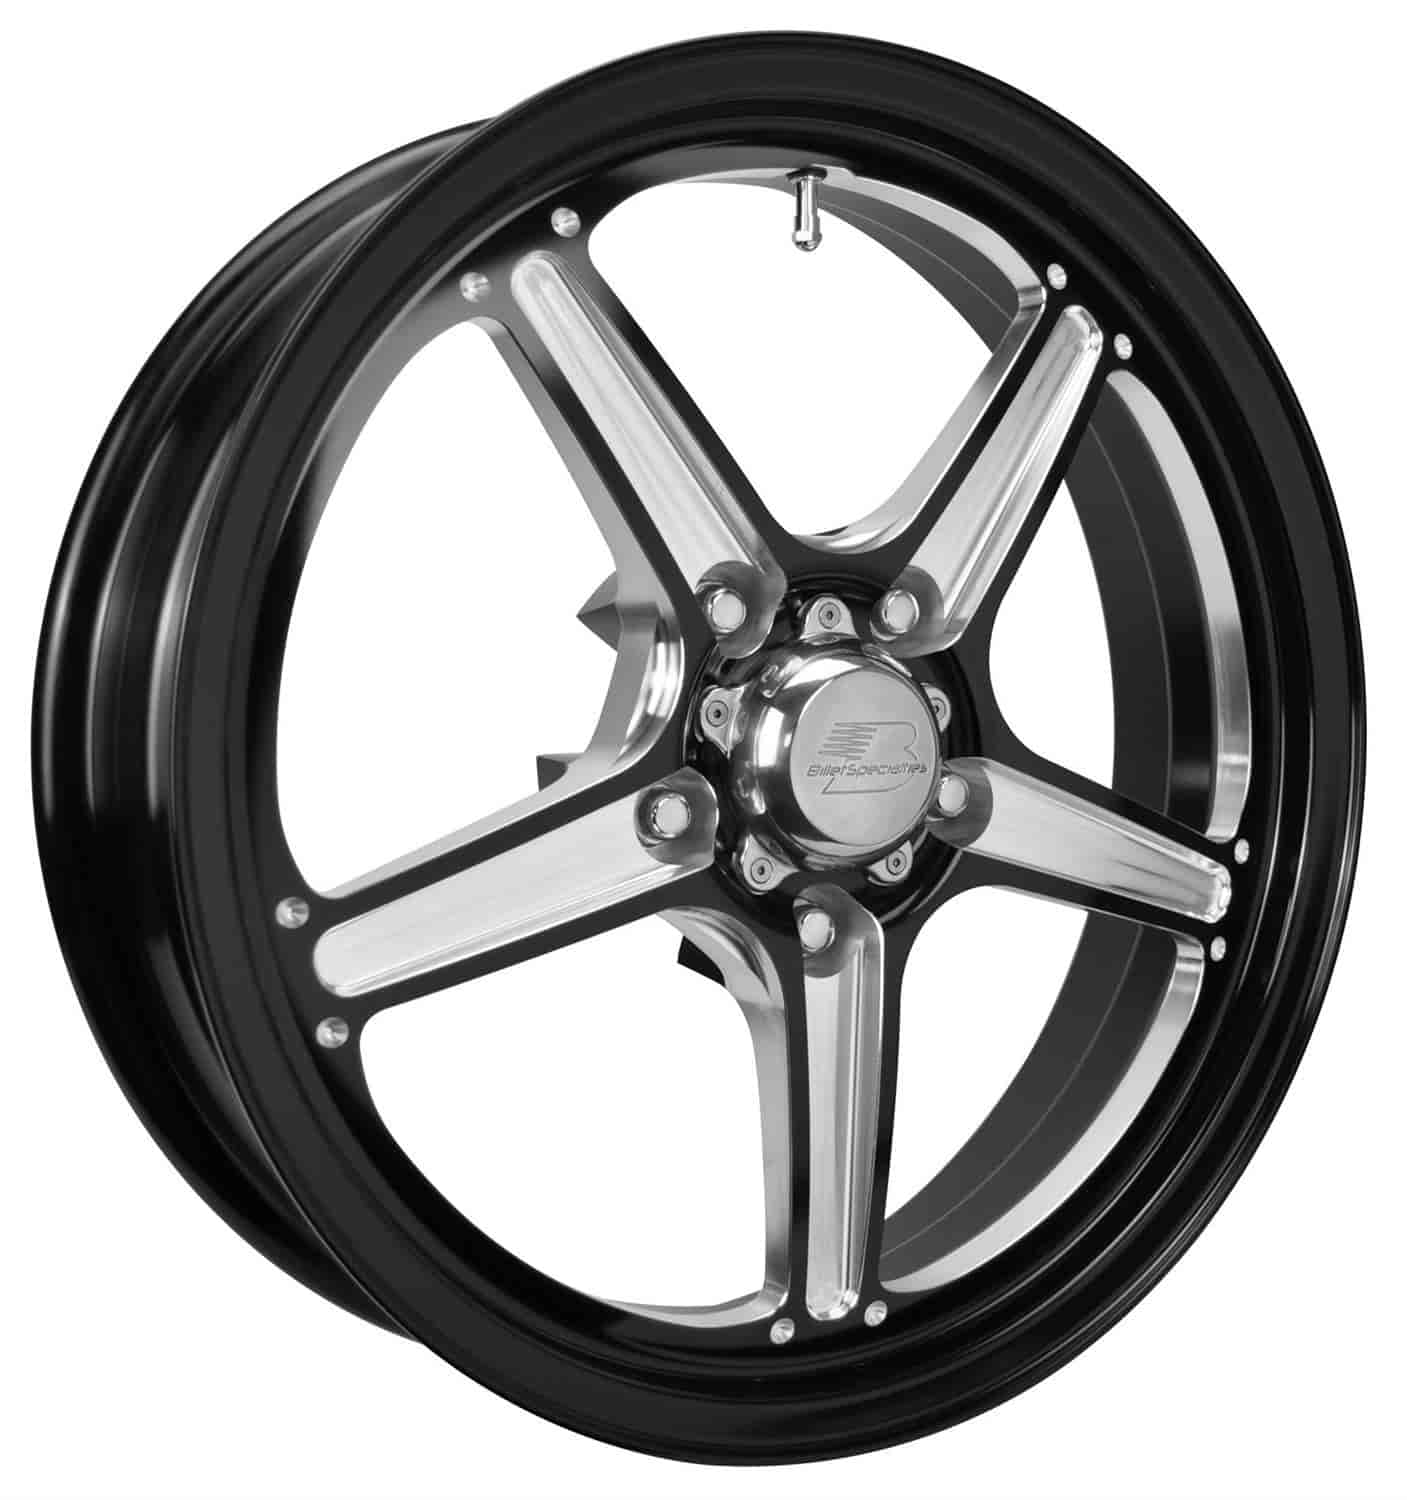 Street Lite Black Wheel Size: 17'' x 4.5'' Bolt Circled: 5 x 4.75''